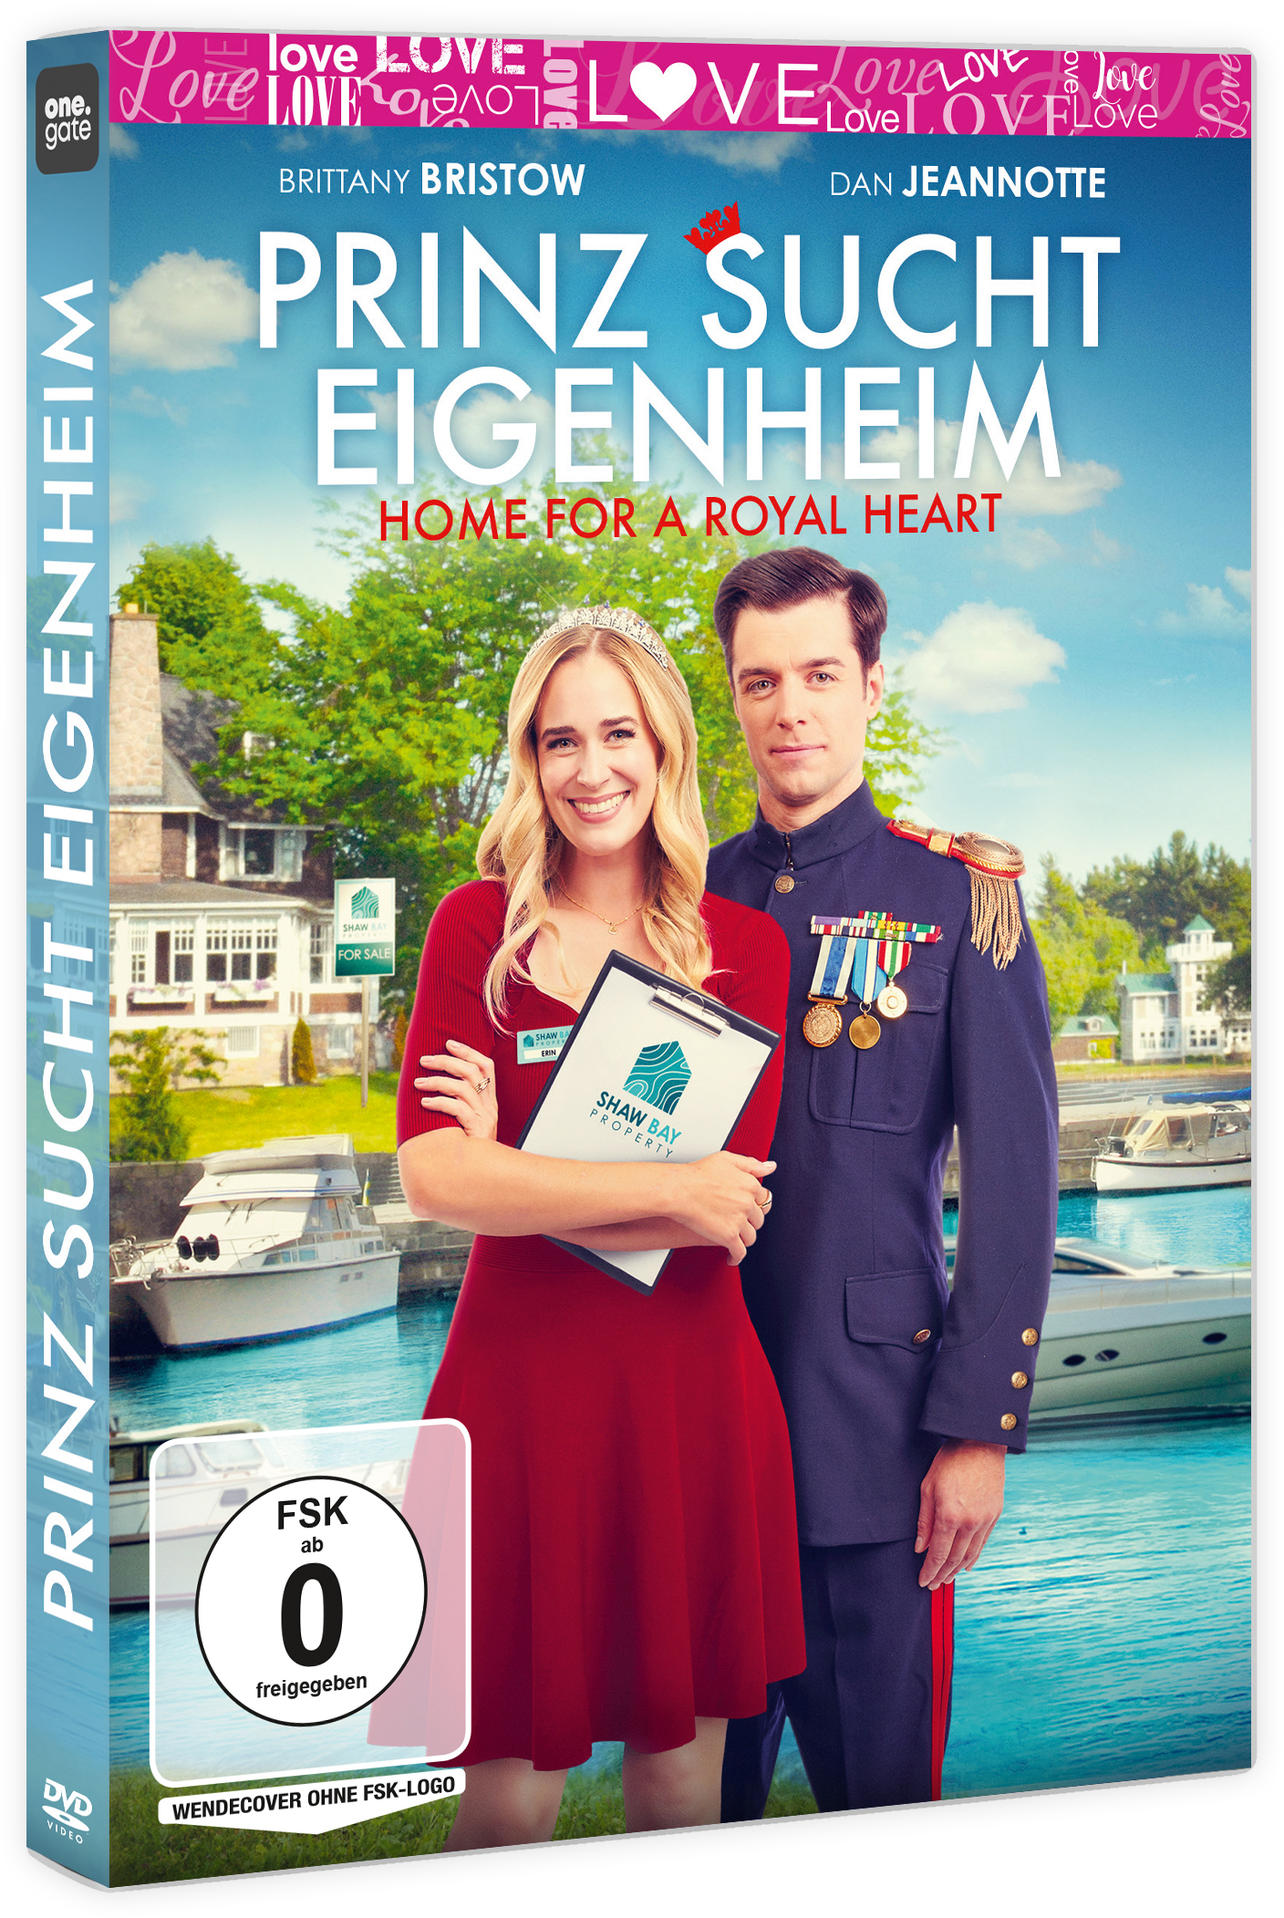 Prinz sucht Eigenheim for Heart Home a Royal - DVD